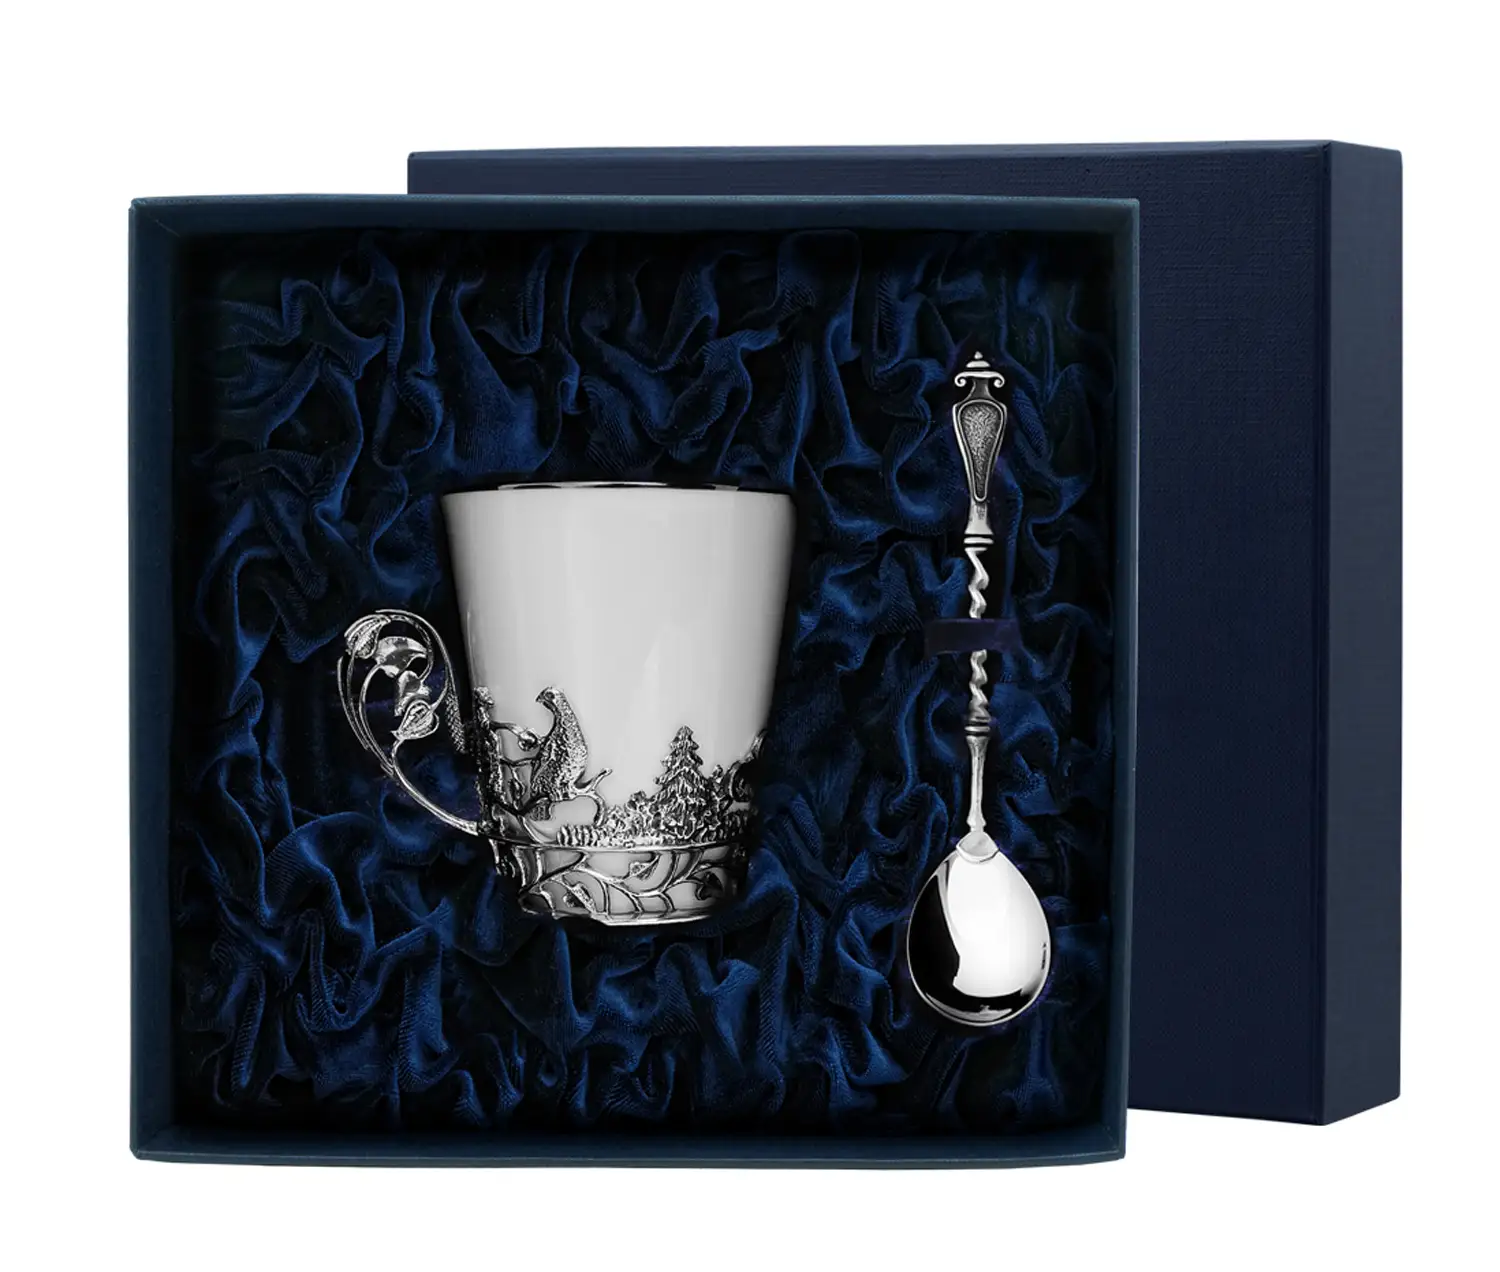 Набор чайная чашка Тетерев: ложка, чашка (Серебро 925) чашка чайная тетерев с чернением серебро 925